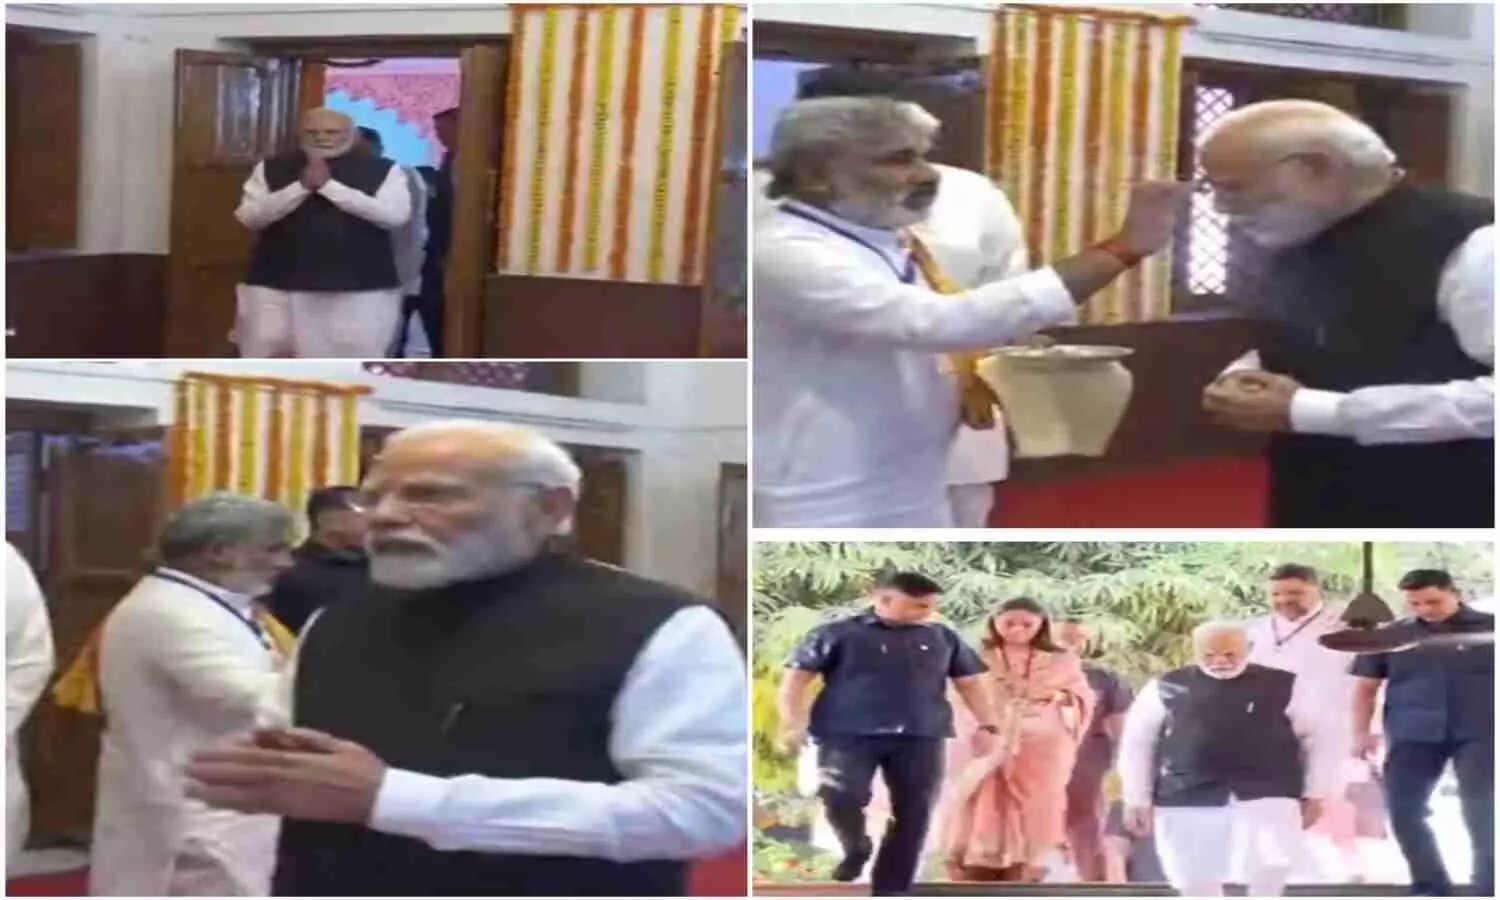 PM Modi in Chitrakoot